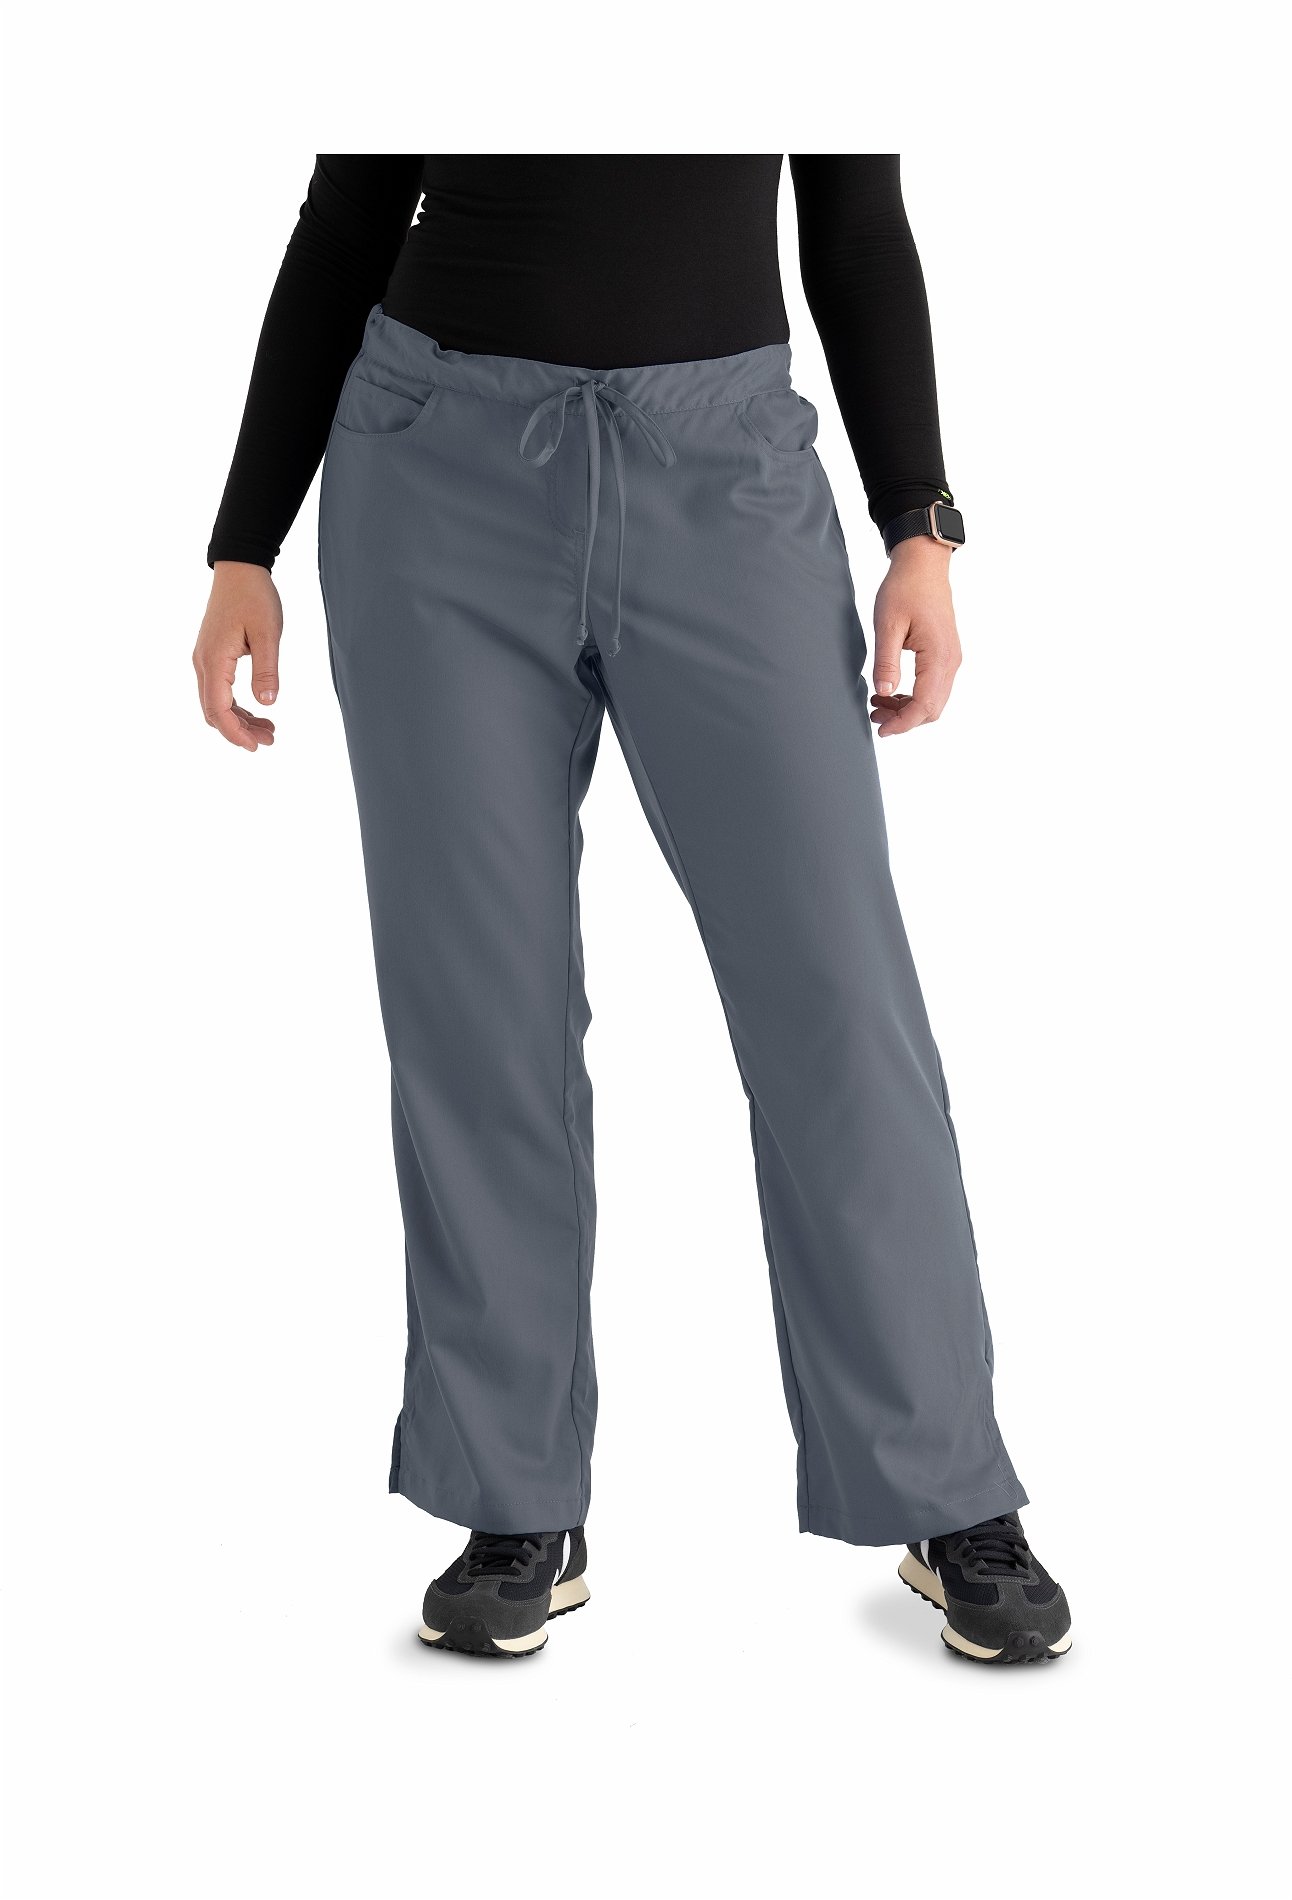 Grey's Anatomy Women's 5 Pocket Drawstring Scrub Pants-4232 (Granite - XXX-Large)